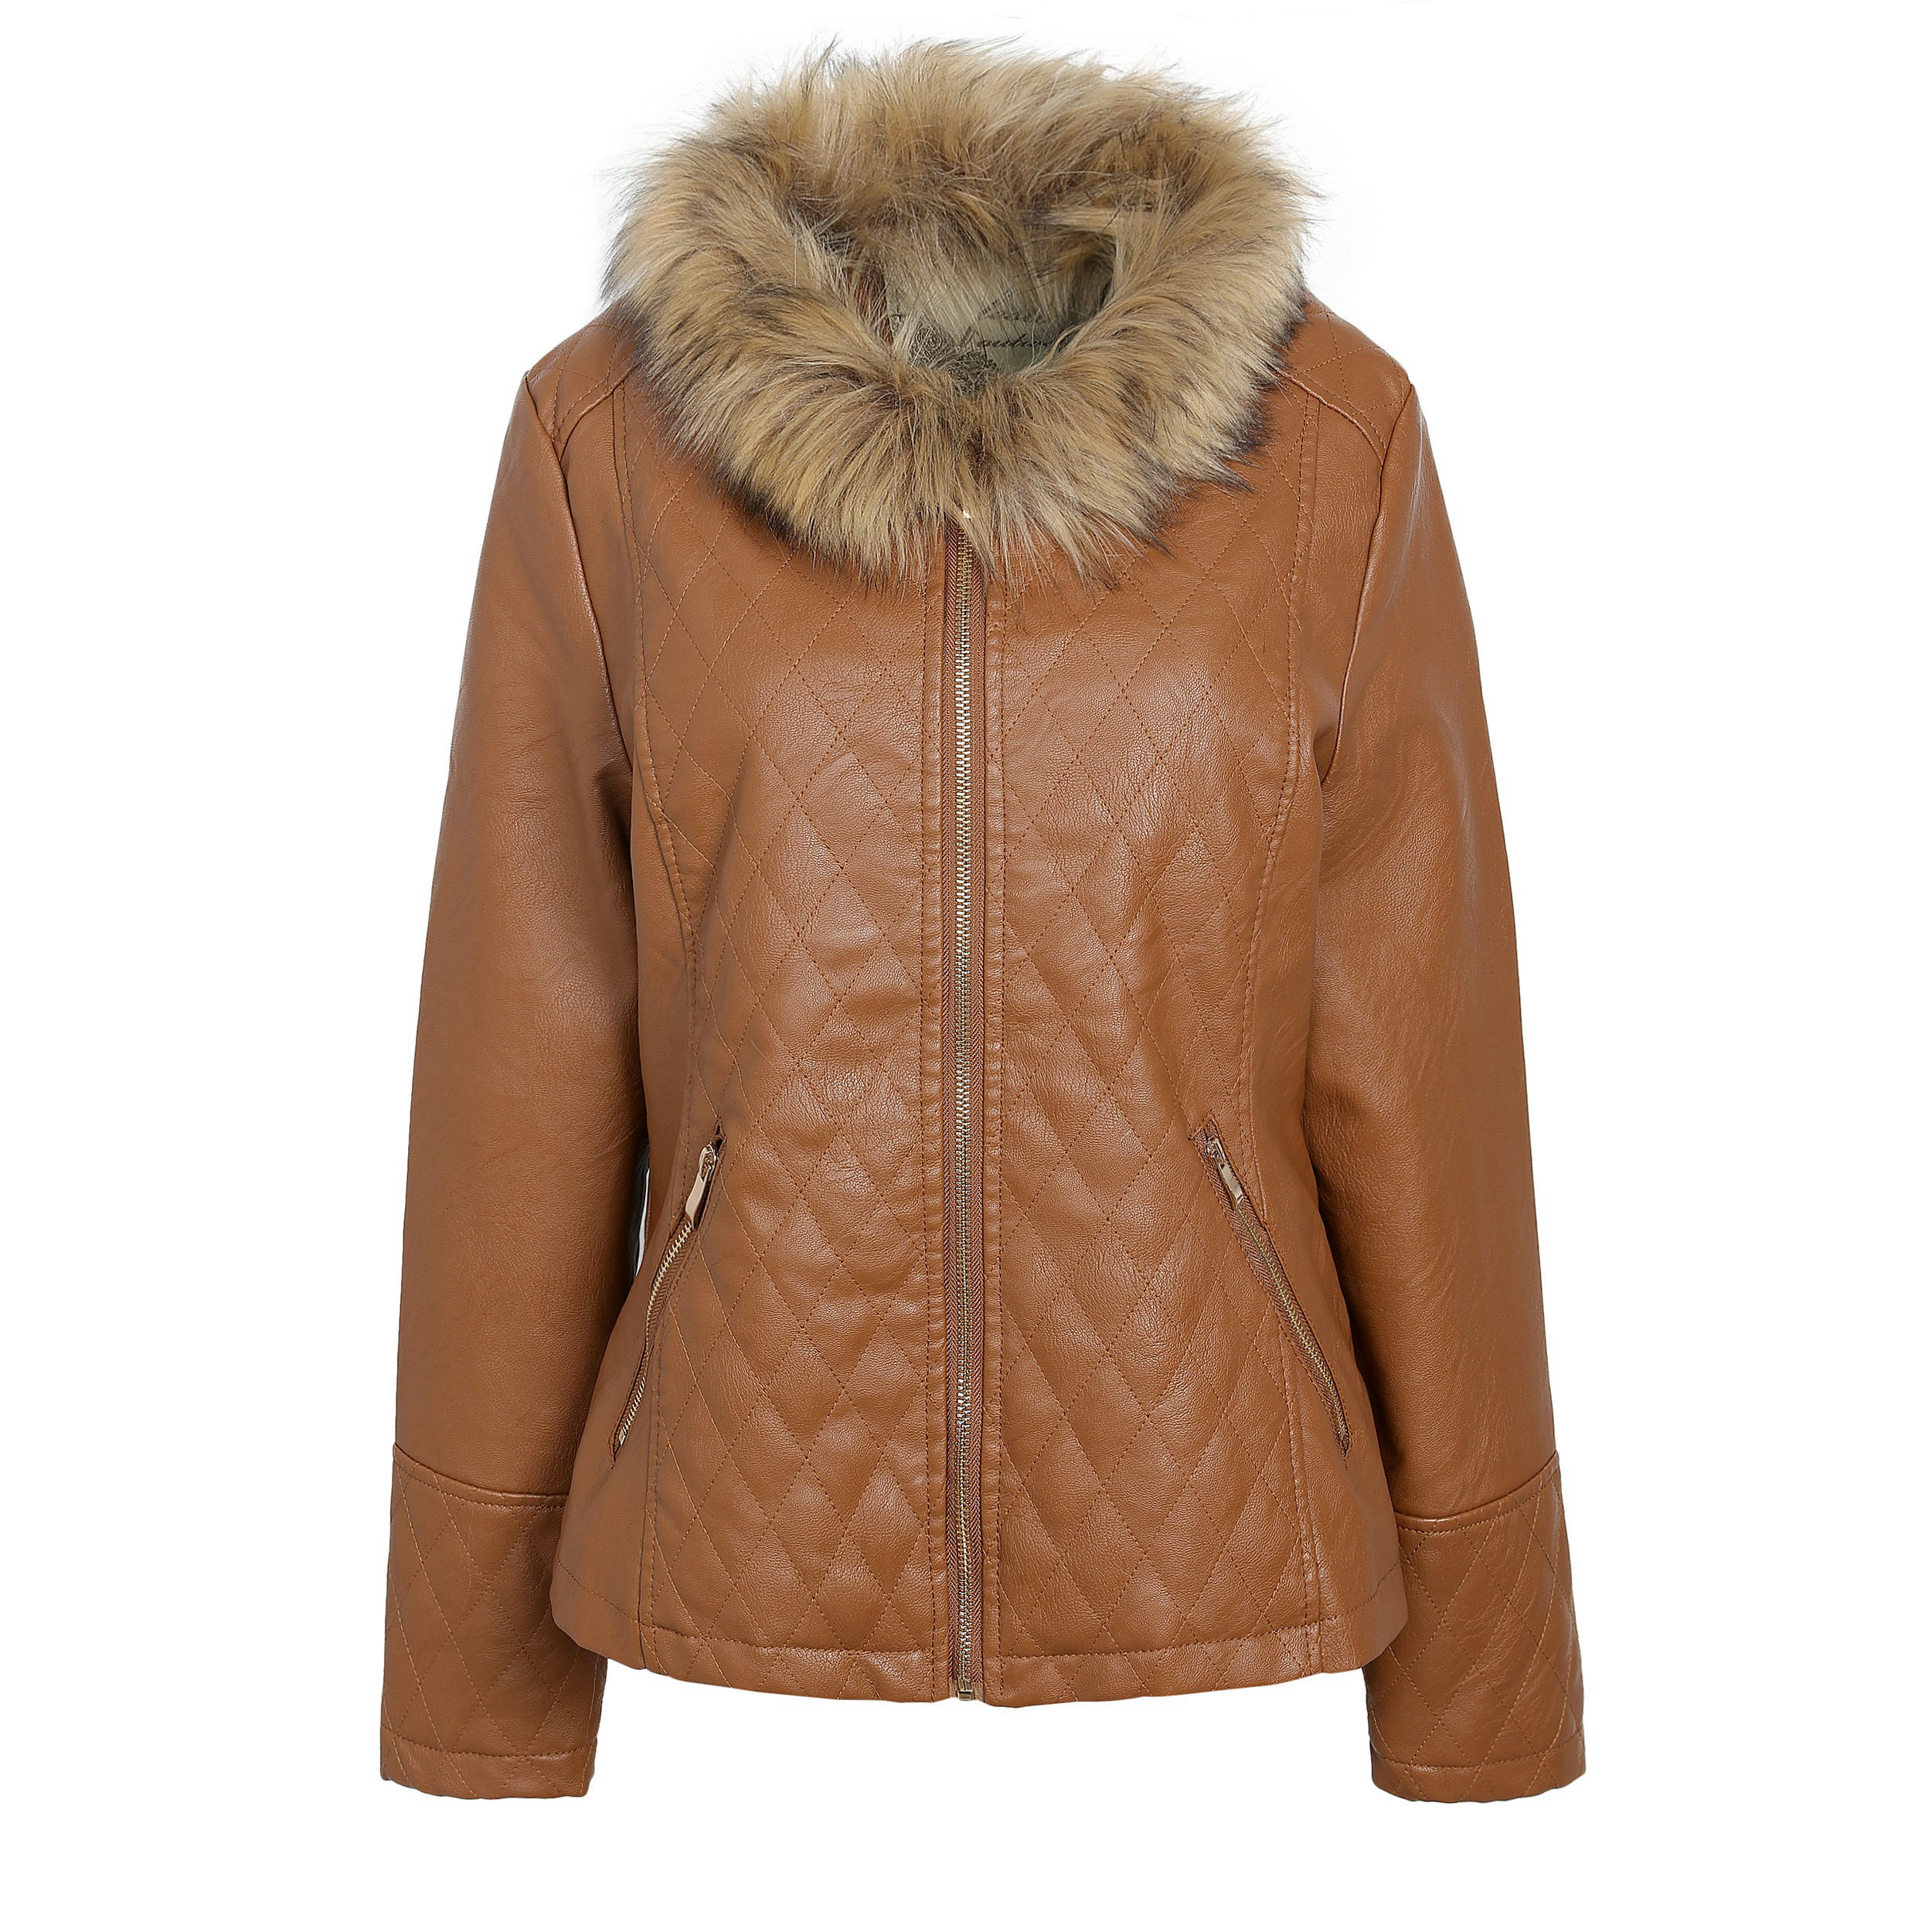 Ladies Leather Jacket With Fur